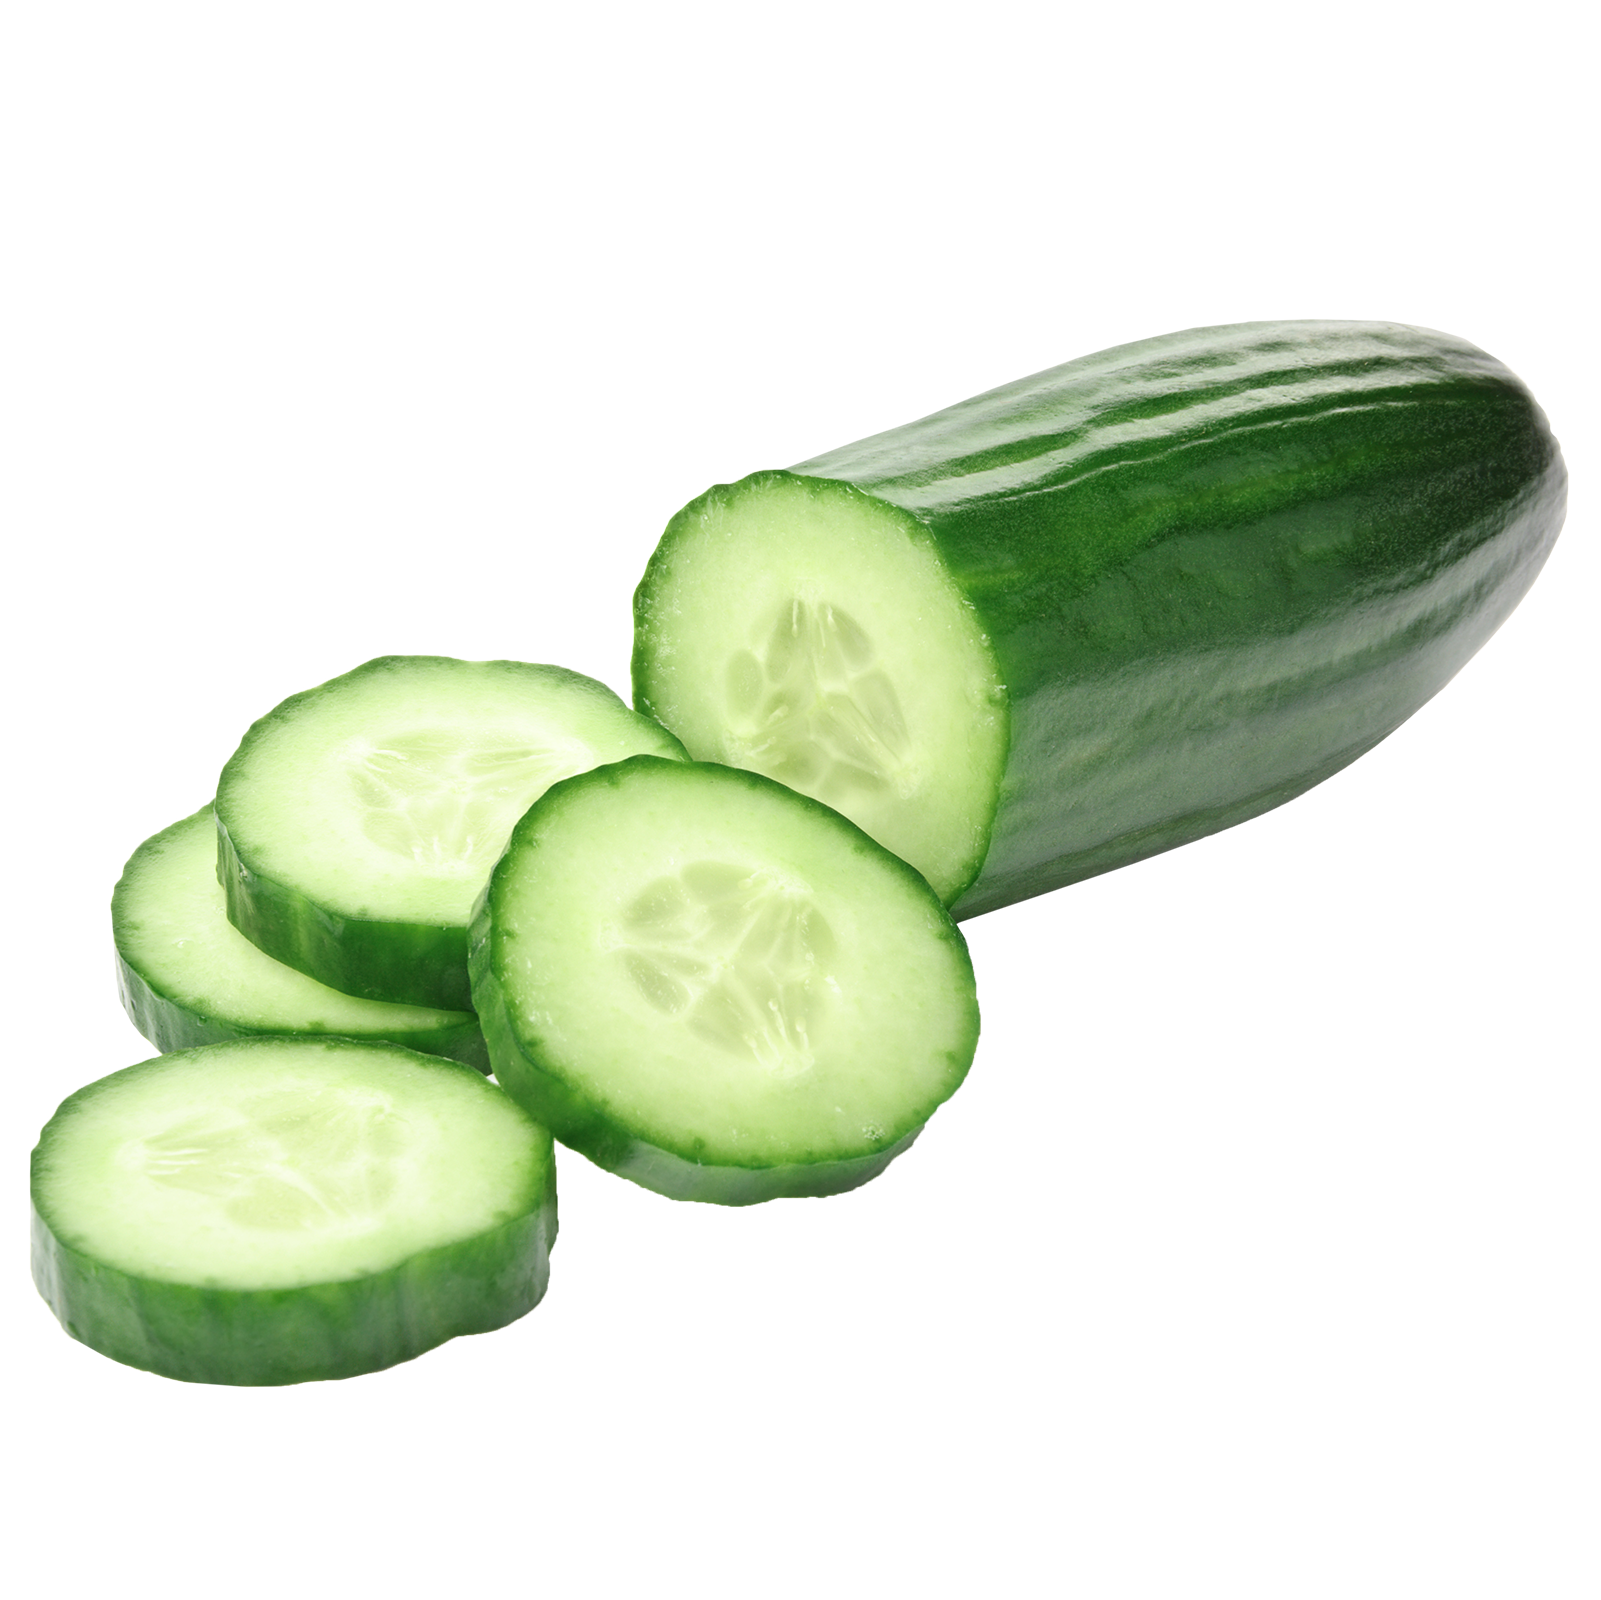 cucumber, smoothie recipe builder now foods #26759